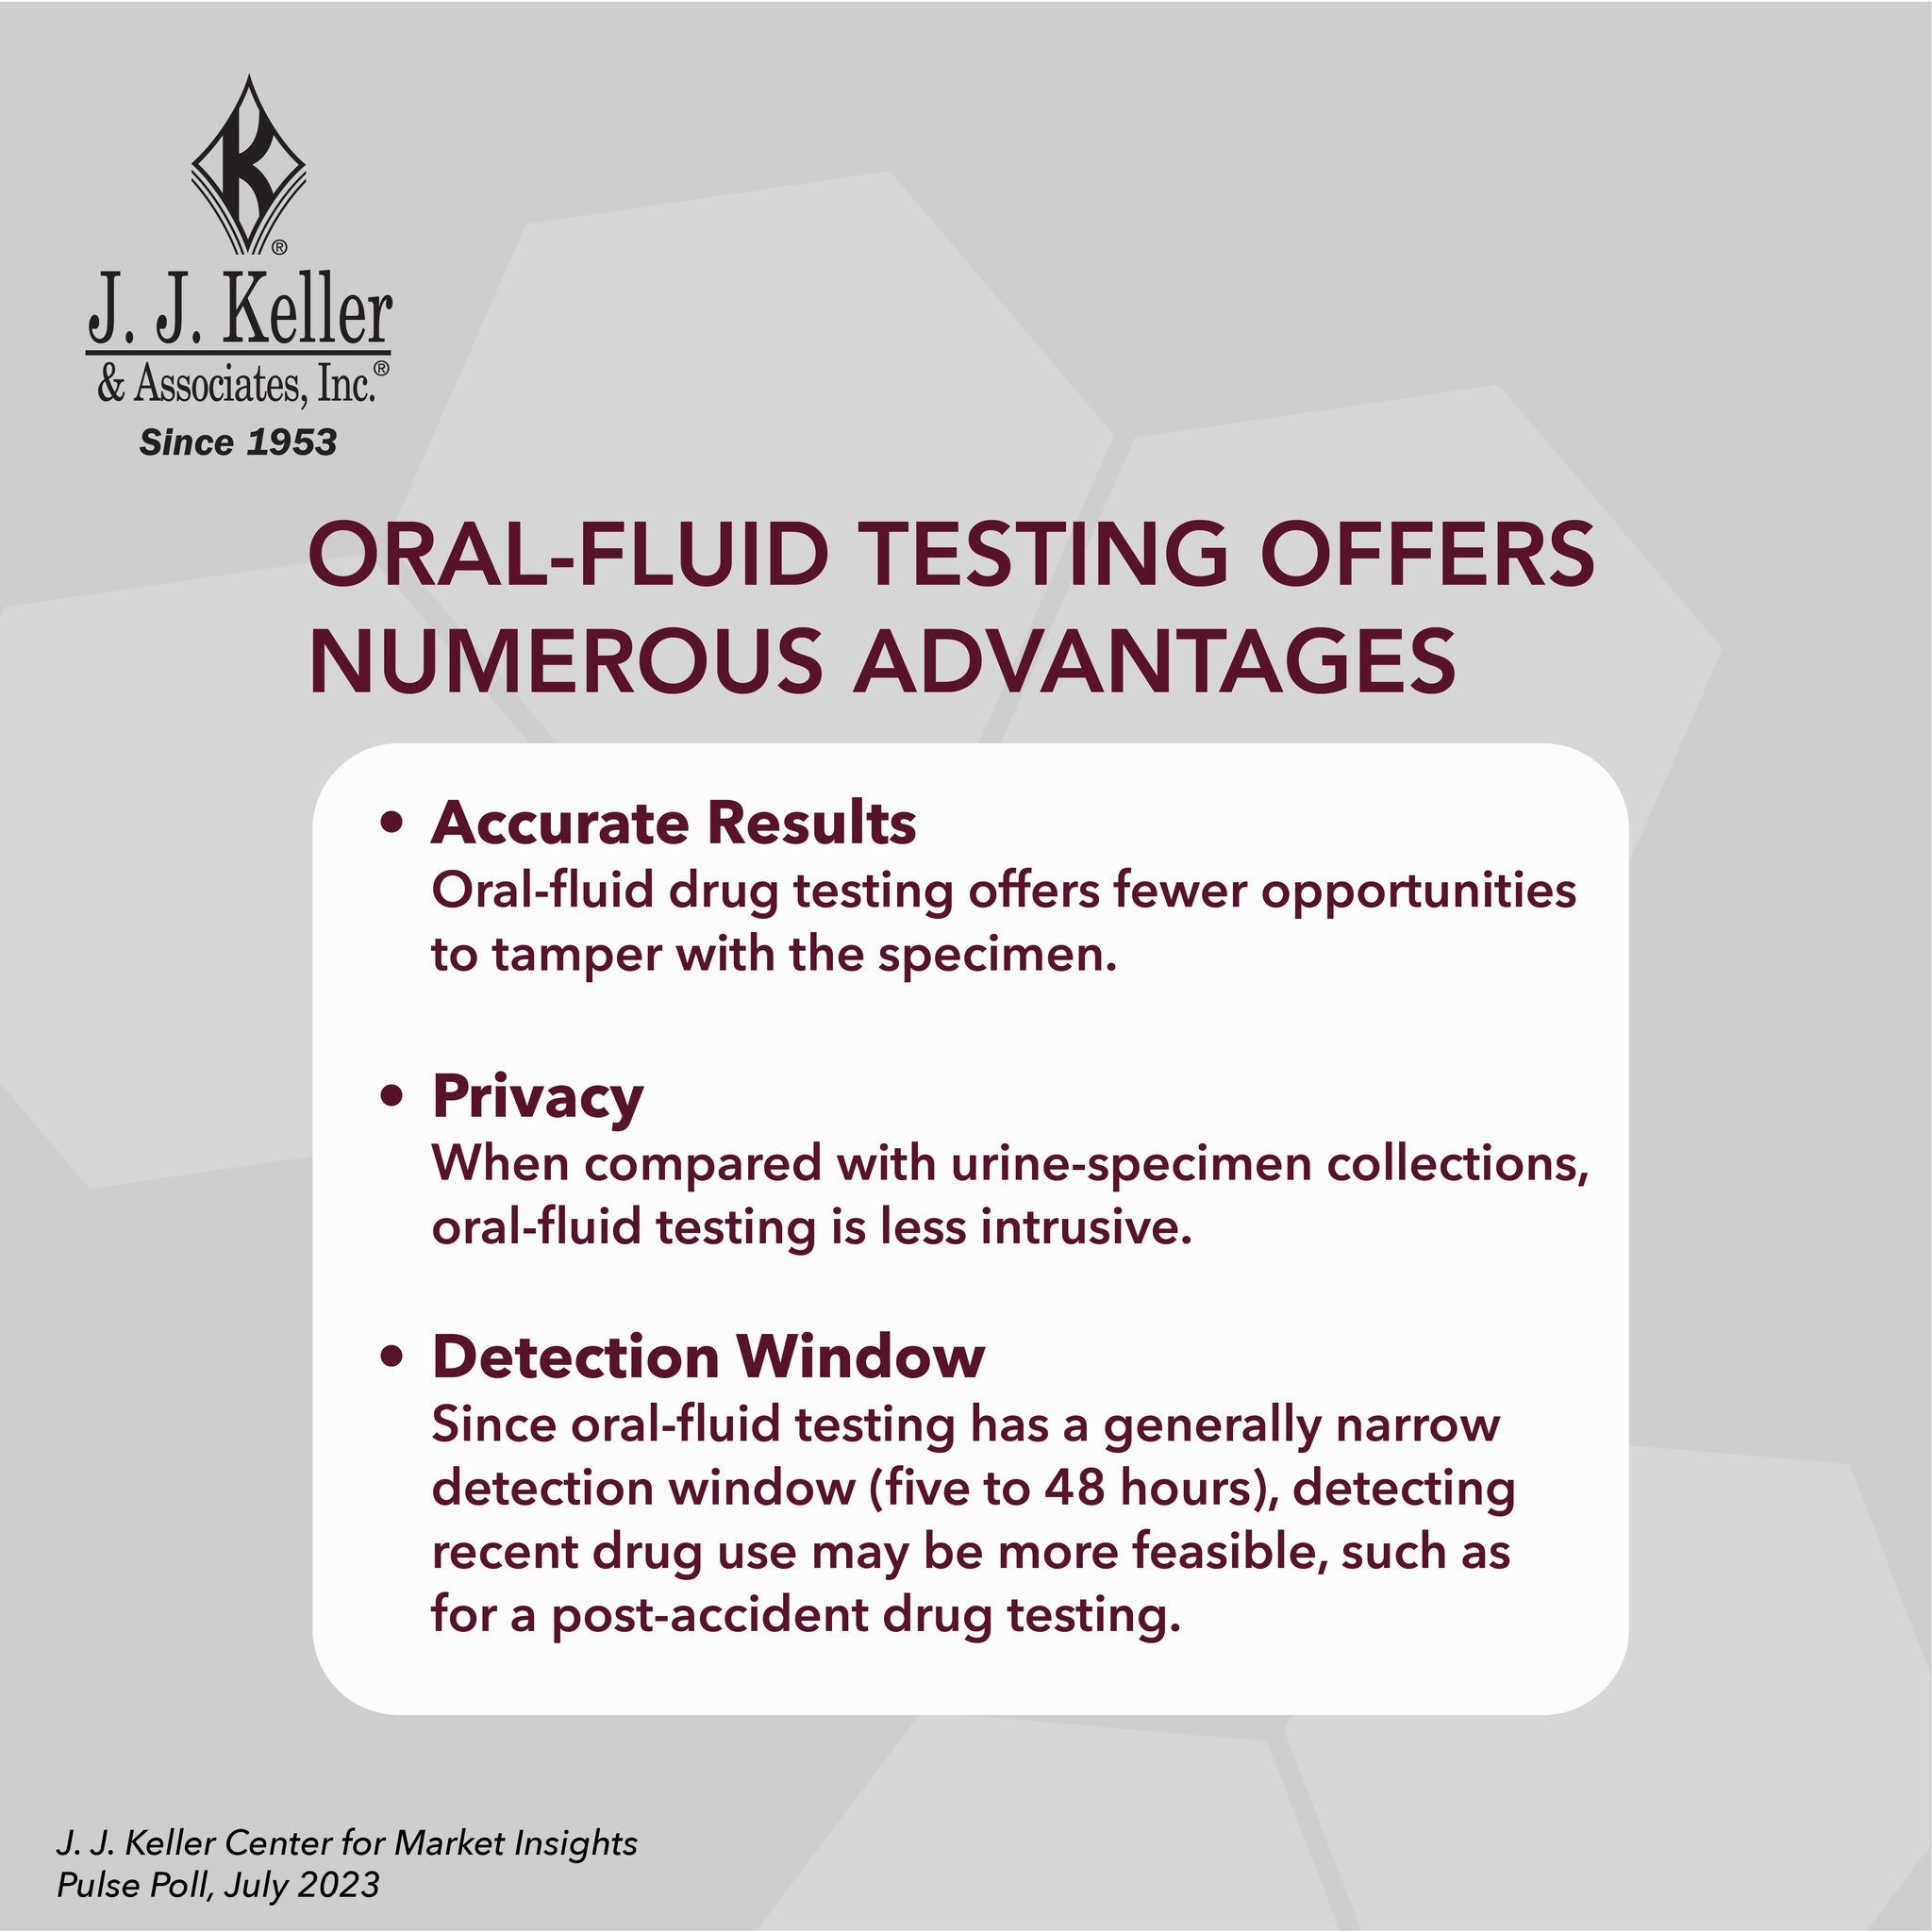 Advantages of oral-fluid testing